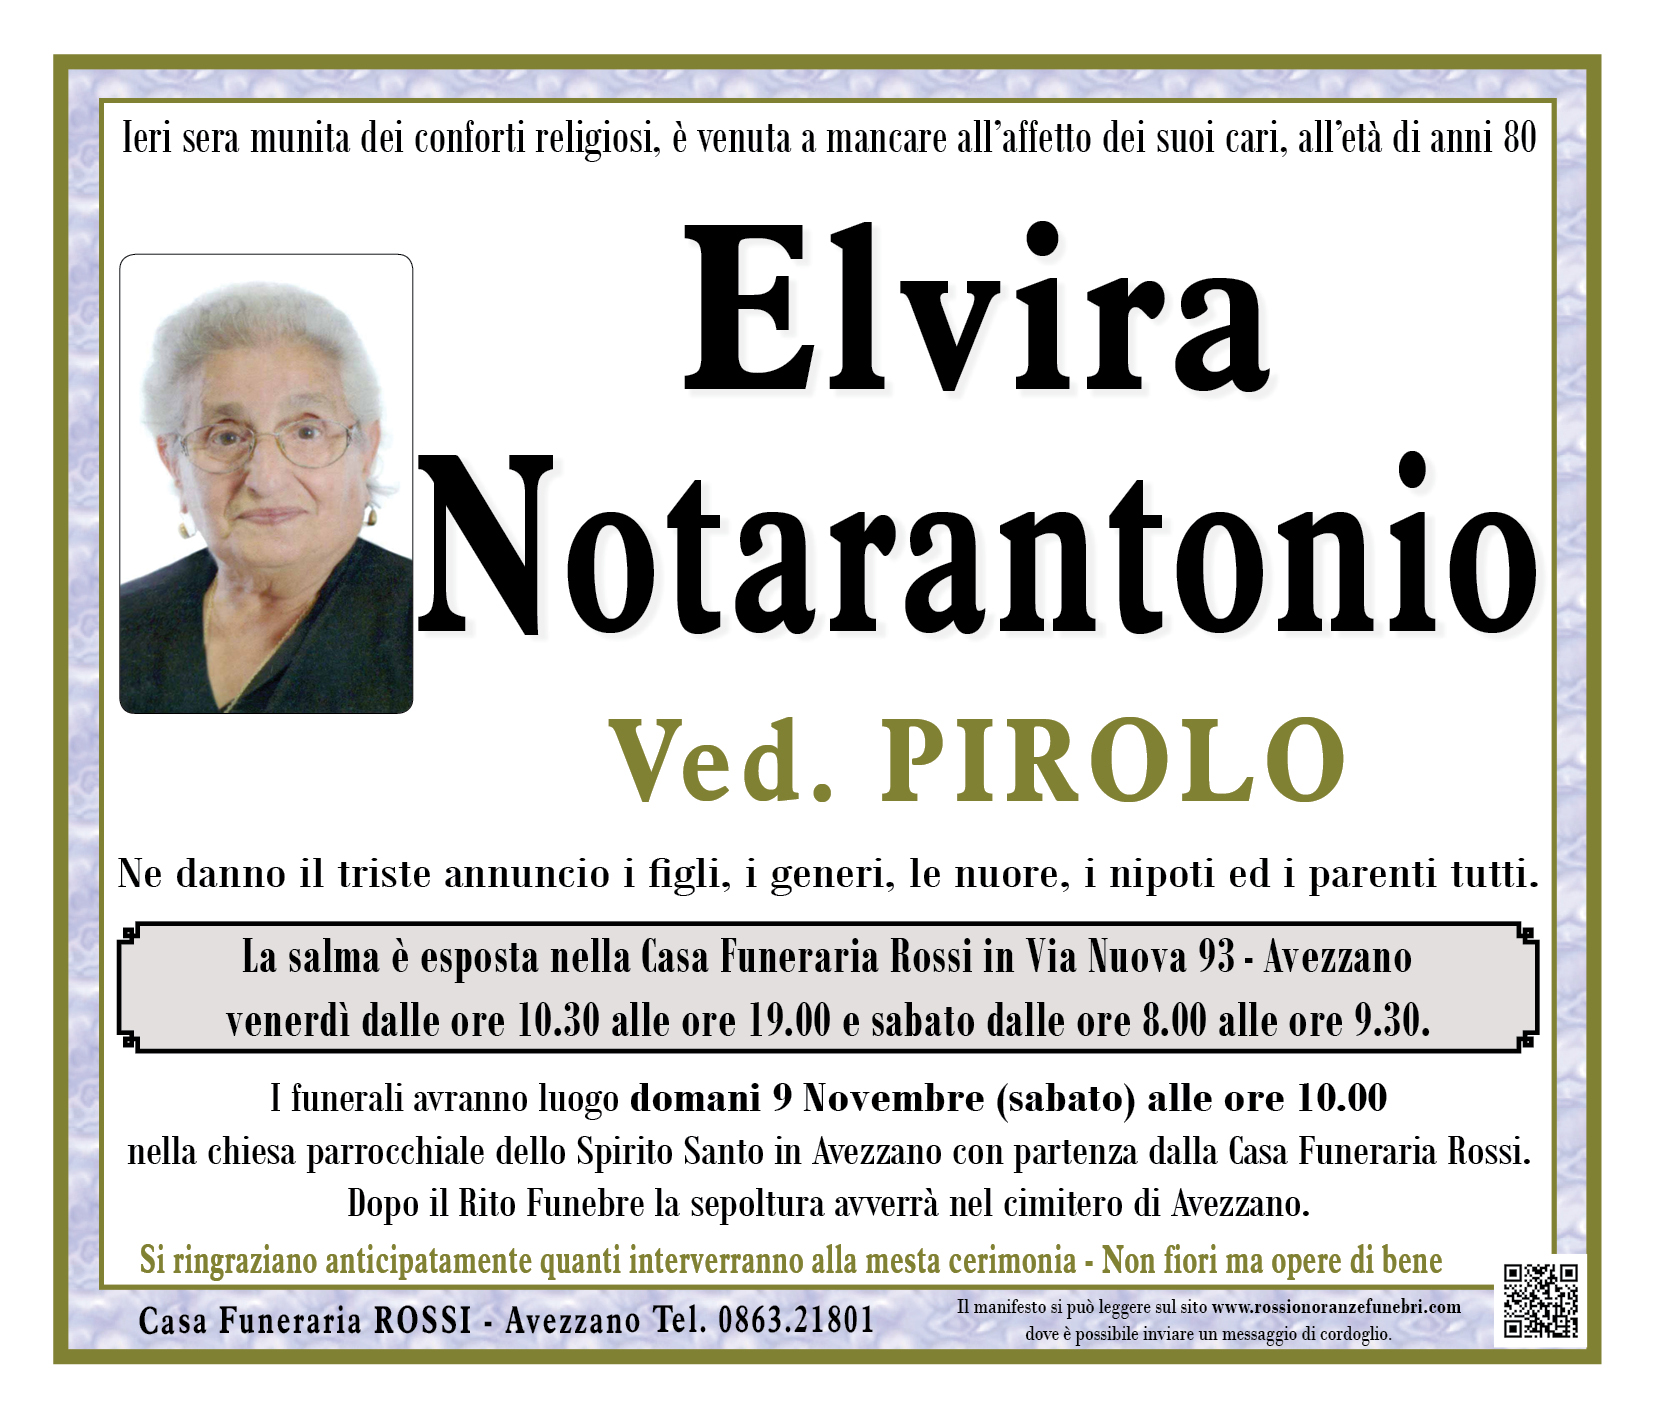 Elvira Notarantonio